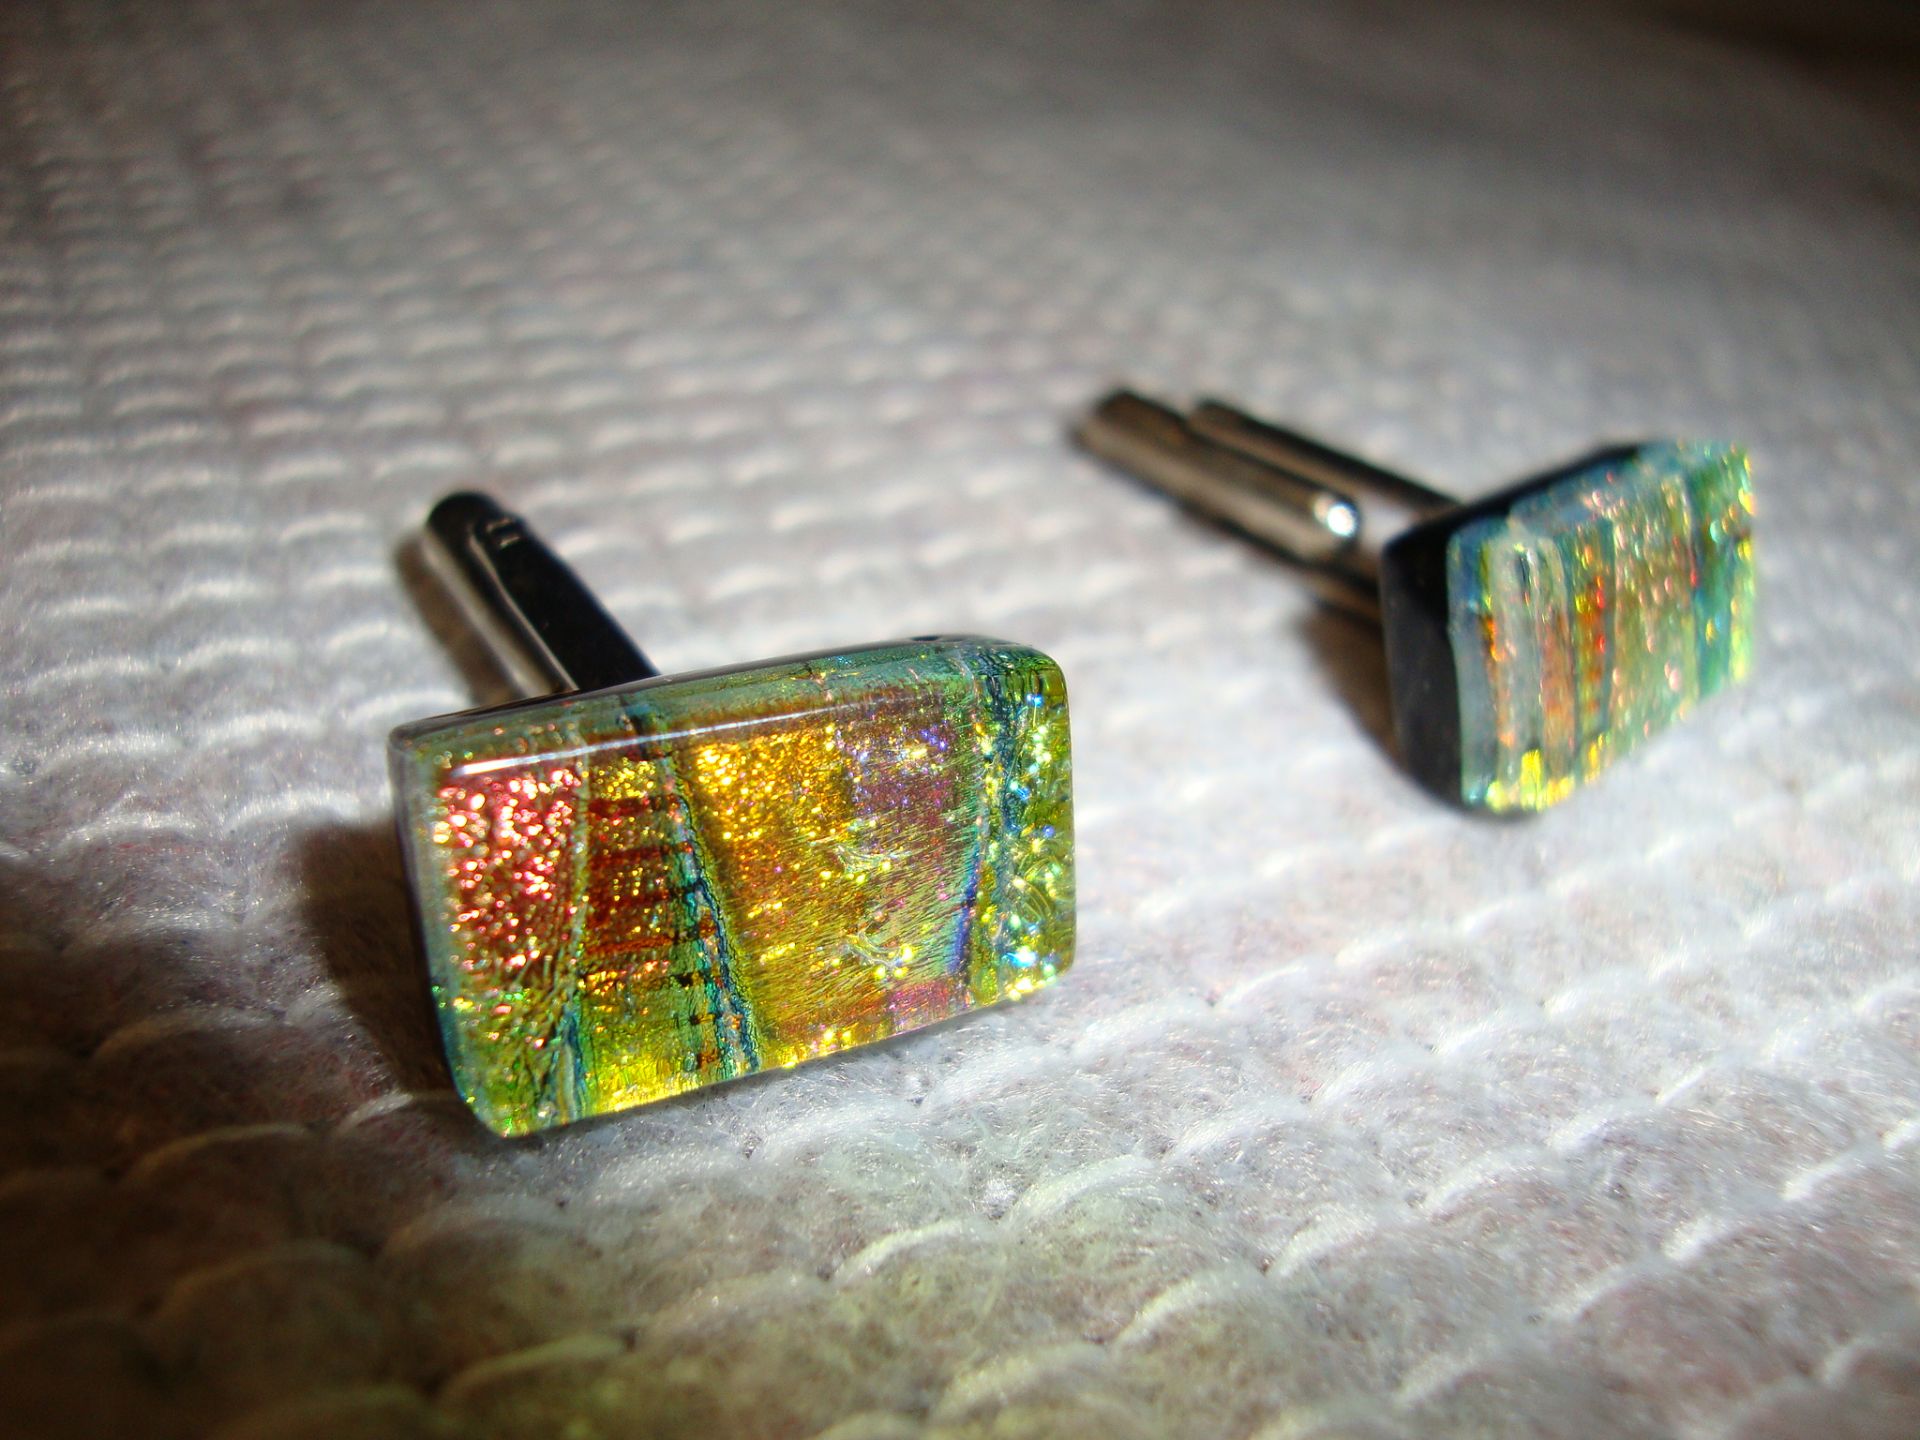 Pair of cufflinks understood to be handmade in glass